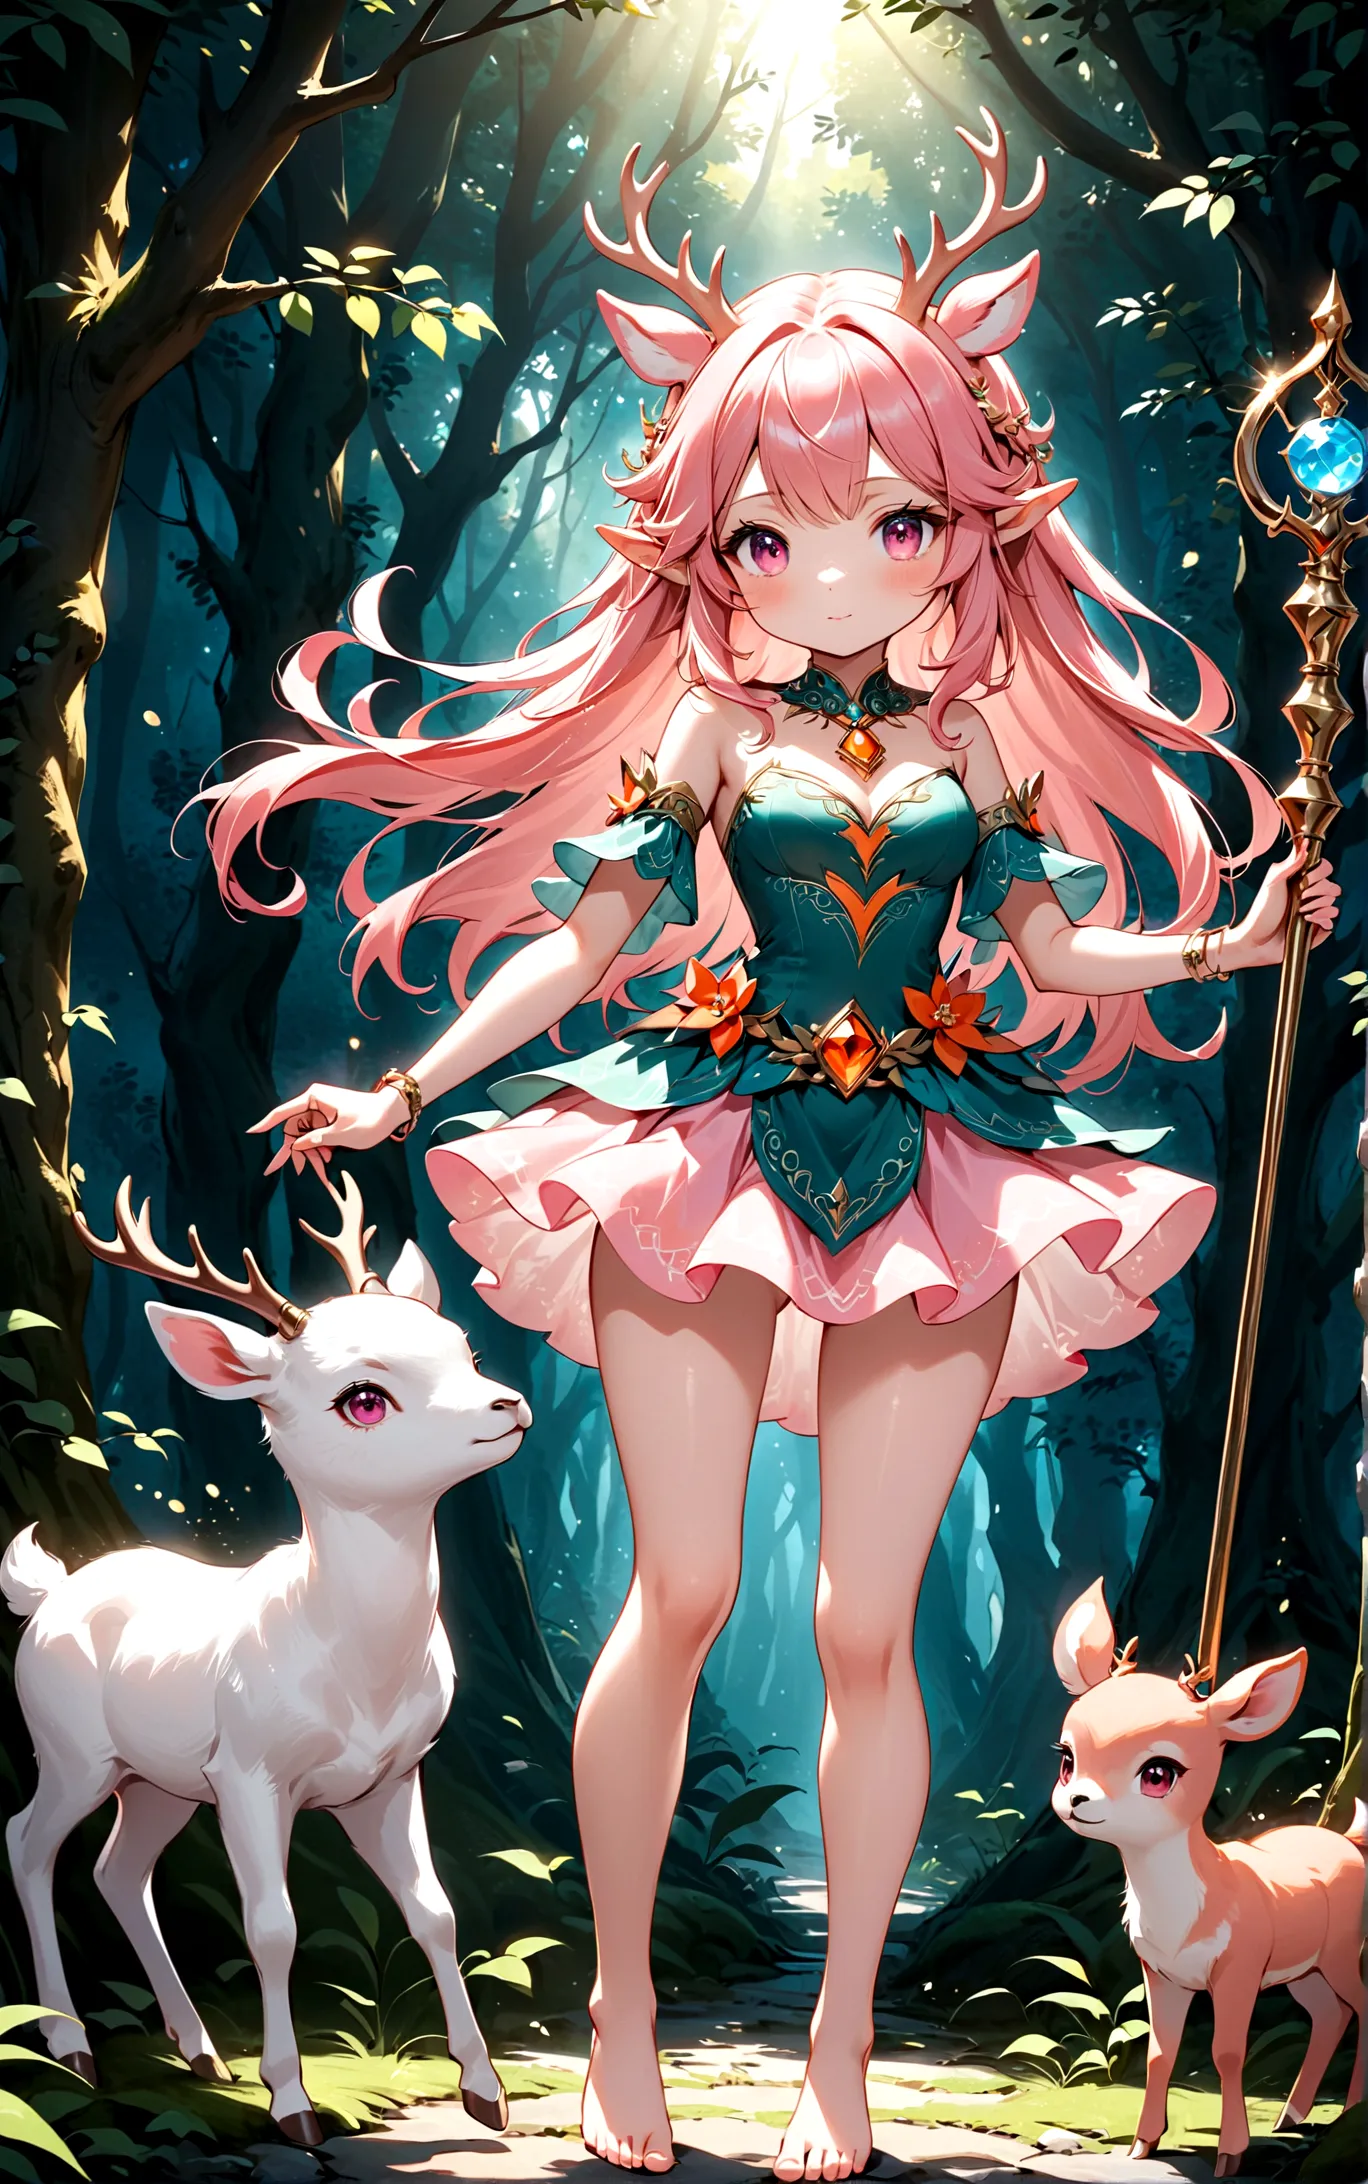 game character，Cartoon anime style，beautiful girl，Cute expression，Fluffy pink hair，Pink Eyes，Cute pink deer antlers，Elf ears，Ora...